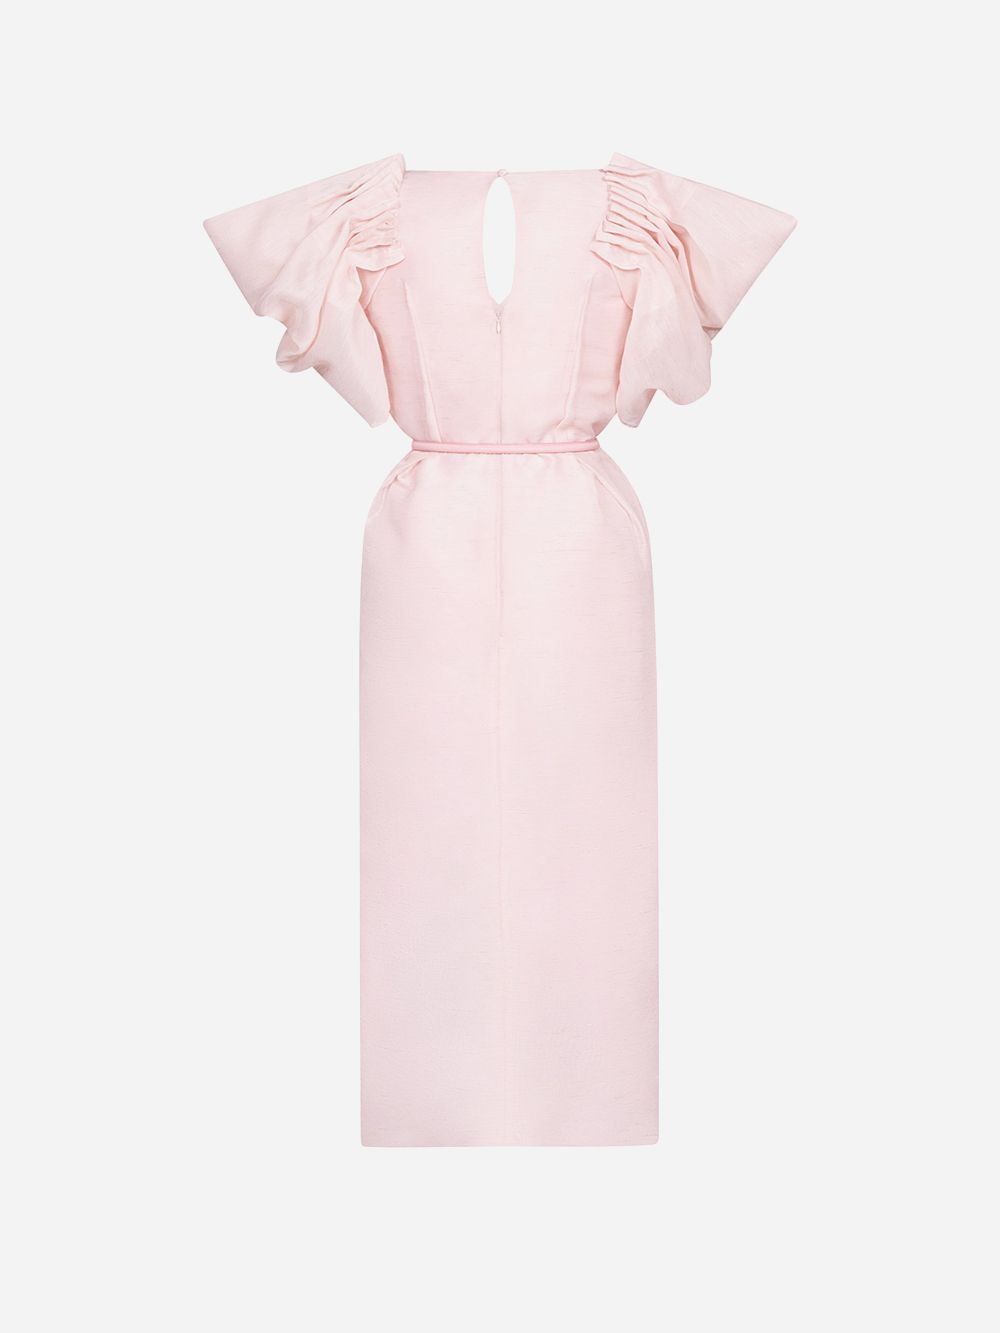 Pink Belted Dress | Diogo Miranda